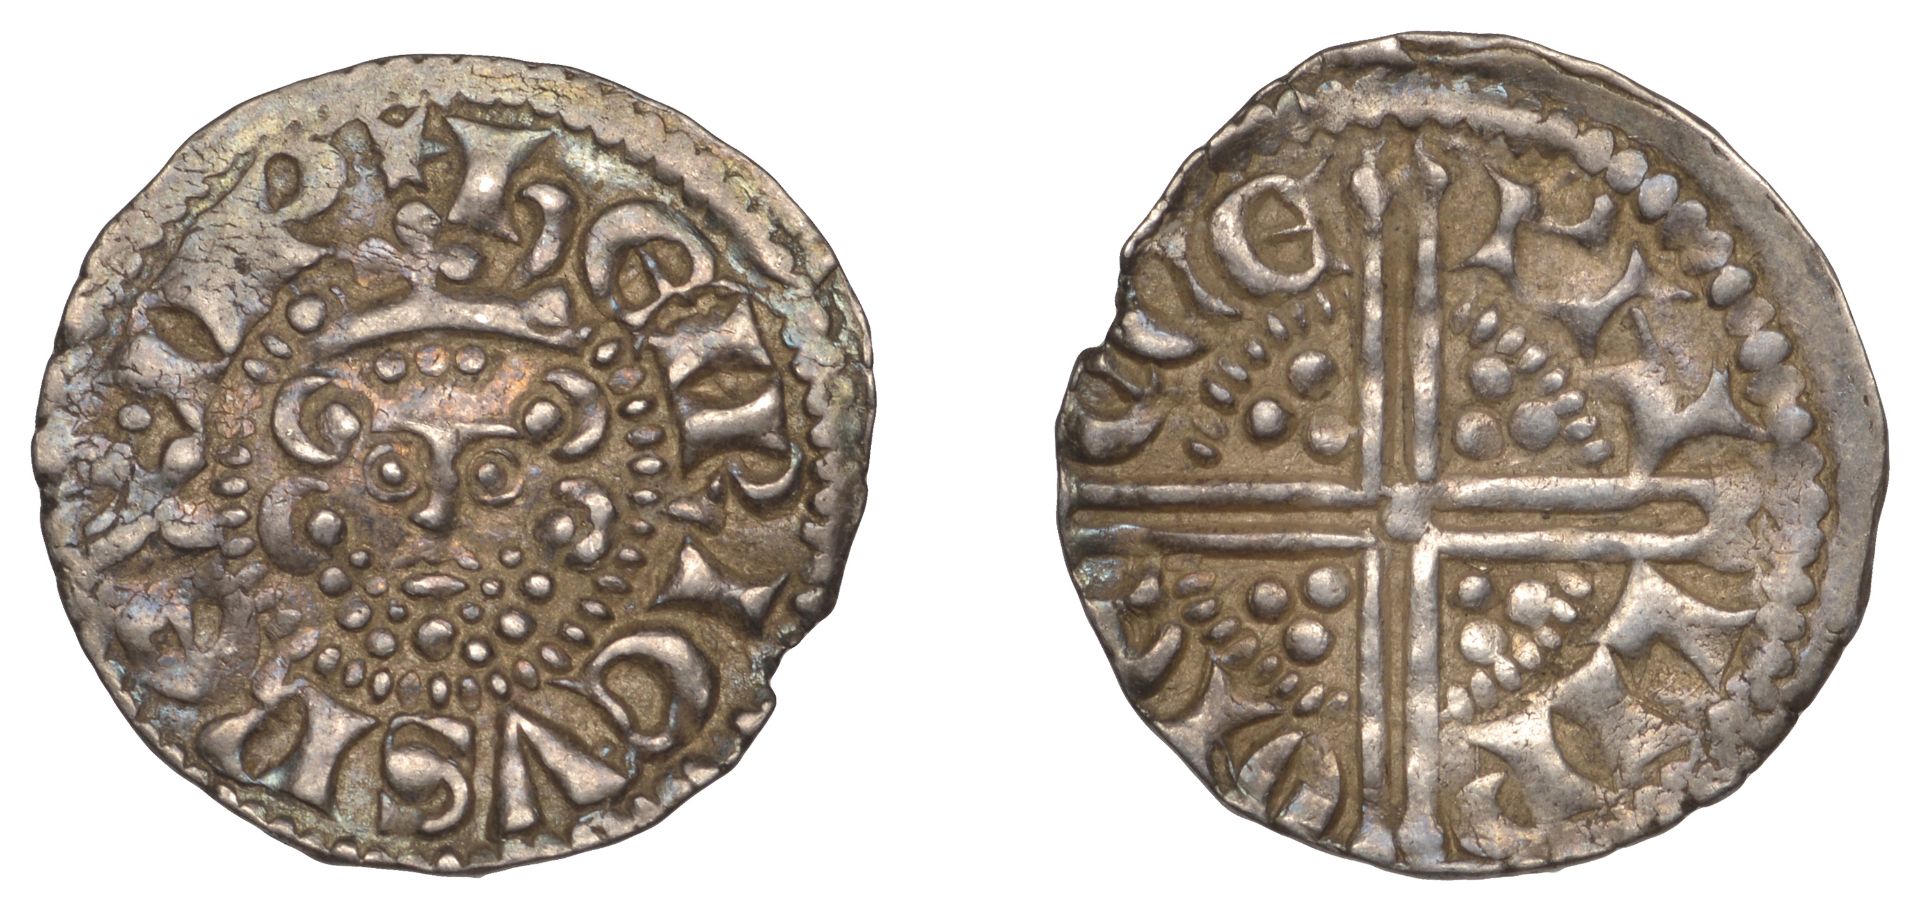 Henry III (1216-1272), Long Cross coinage, Penny, class IIIb, Exeter, Philip, philip on ecce...